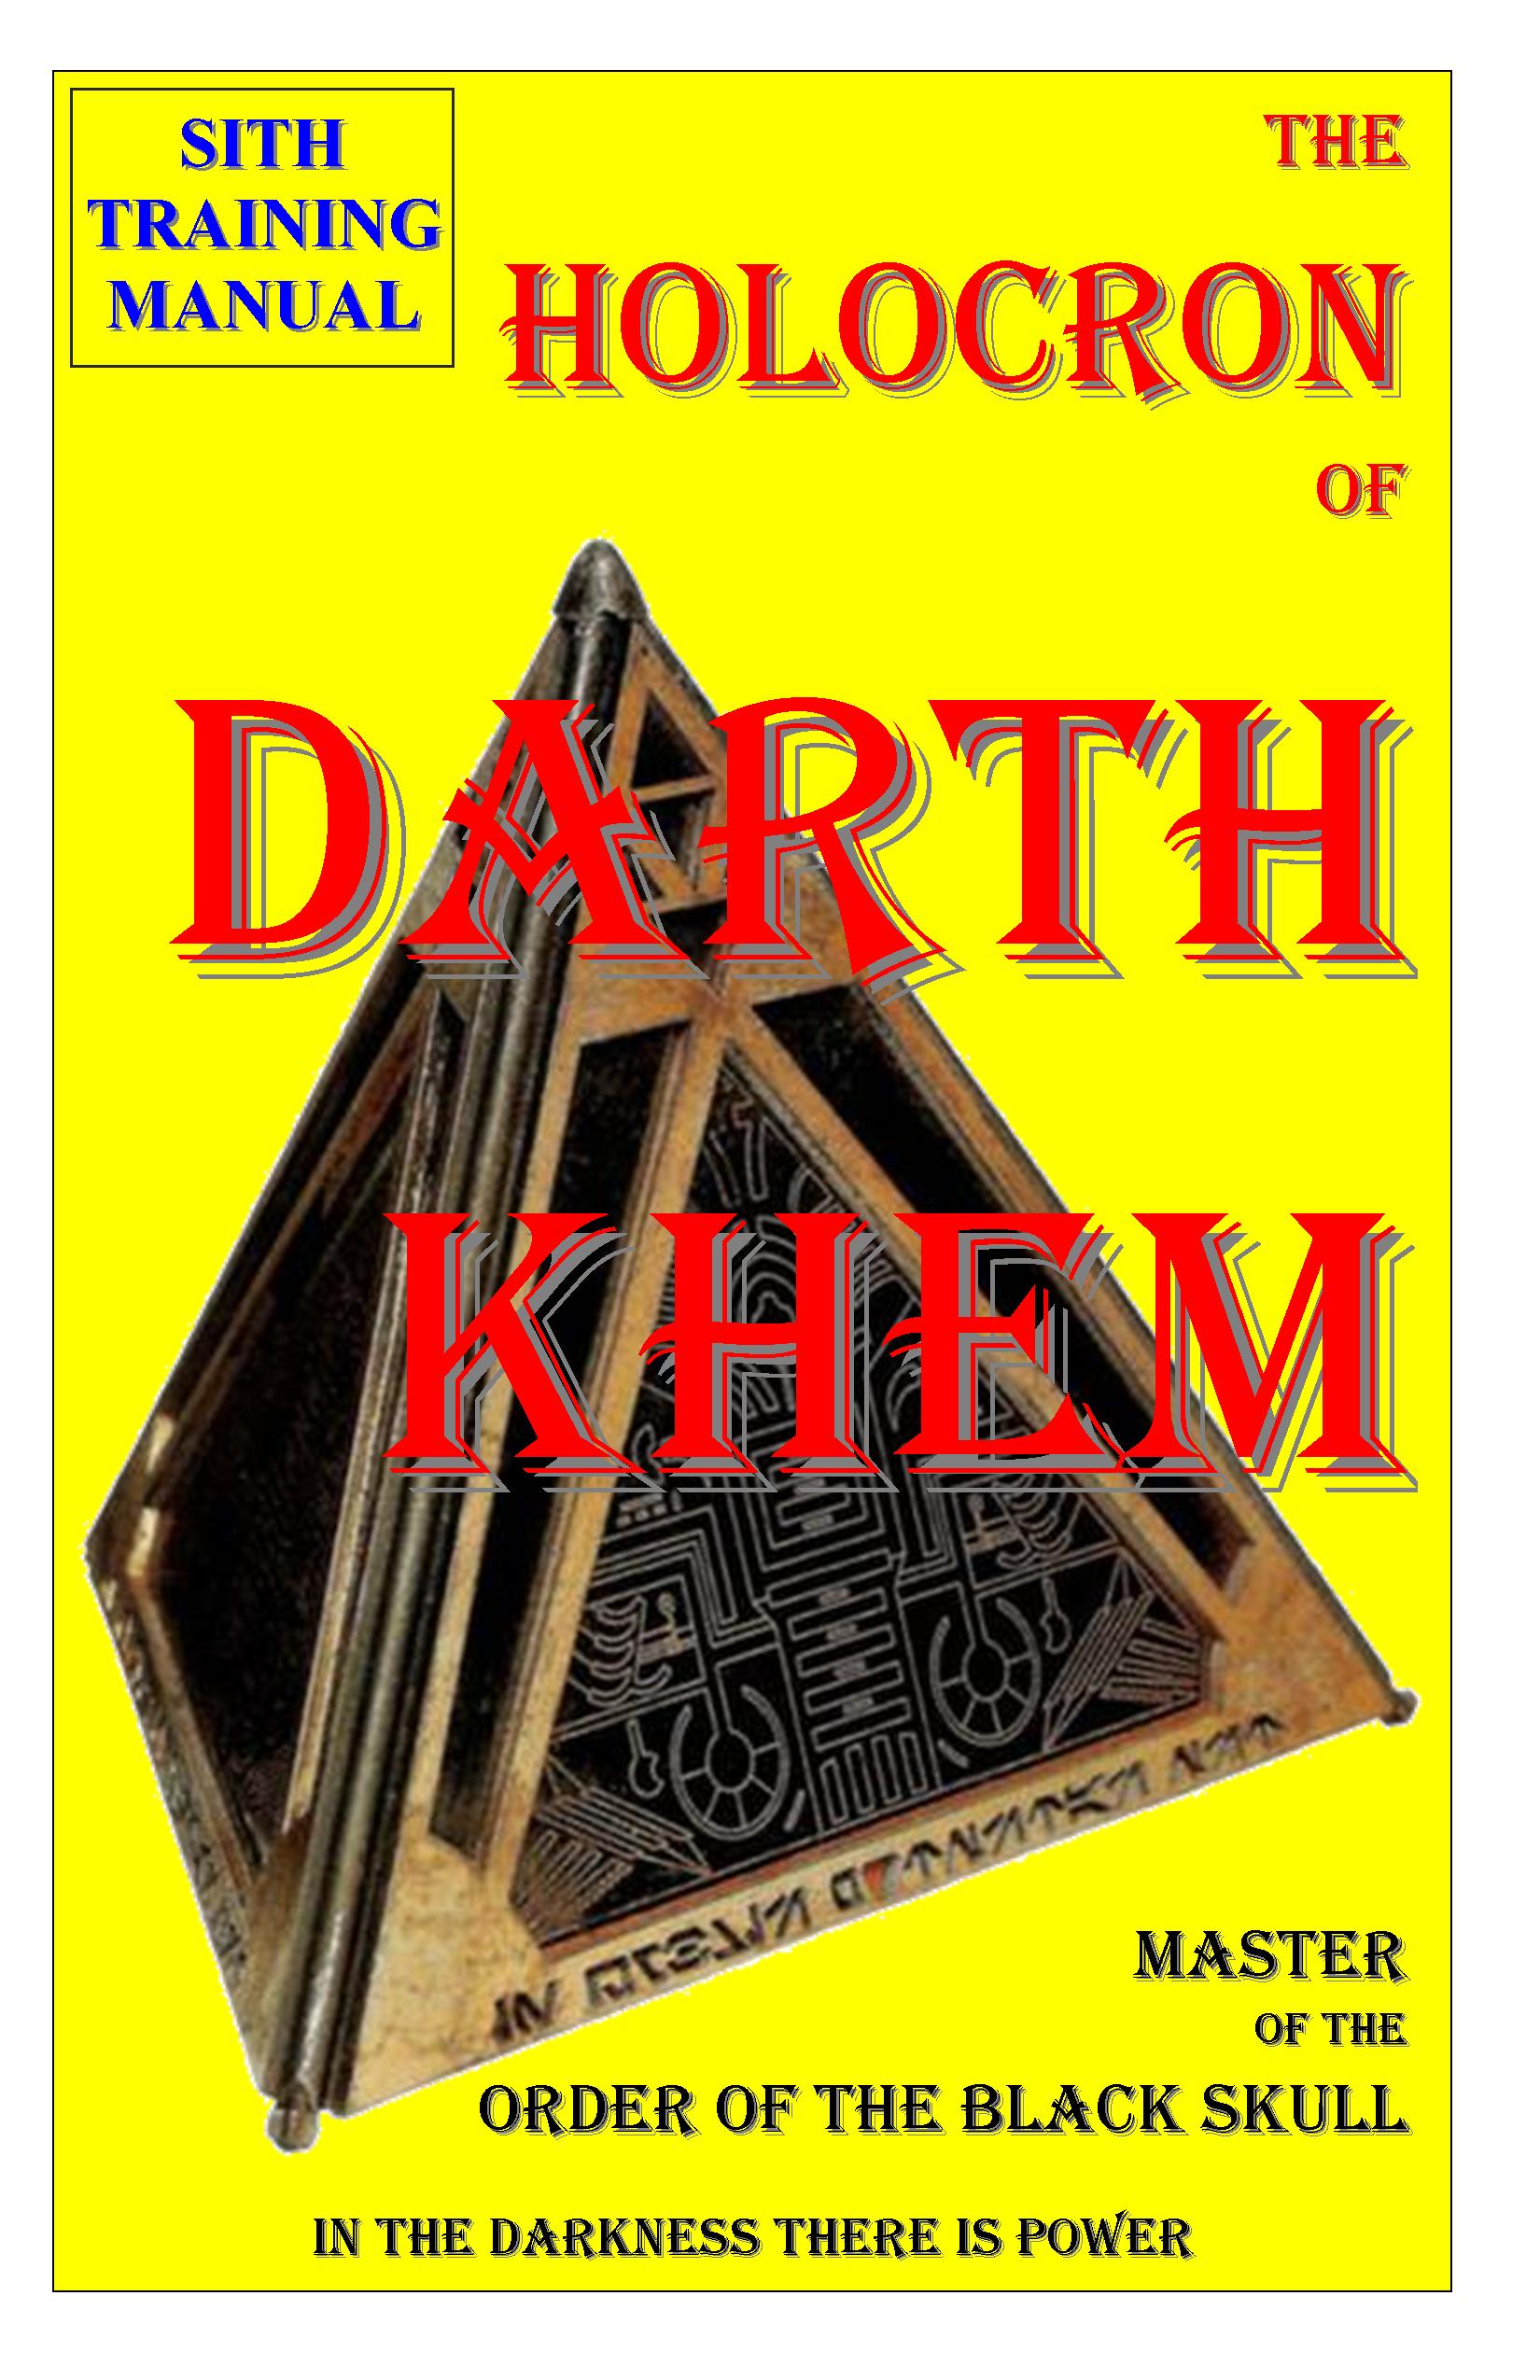 The HOLOCRON OF DARTH KHEM